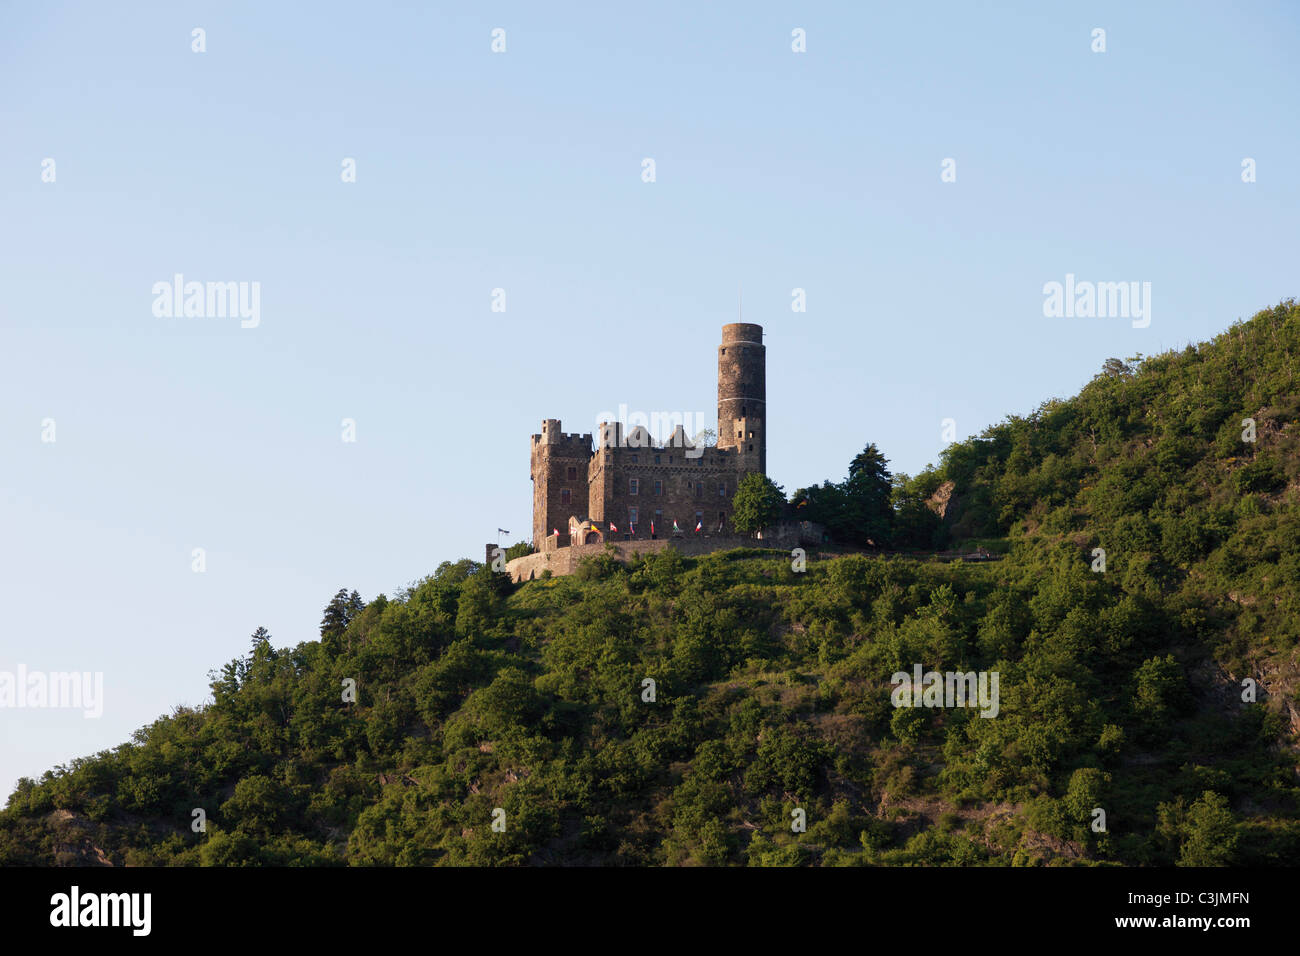 Europe, Germany, Rhineland-Palatinate, View of maus castle Stock Photo